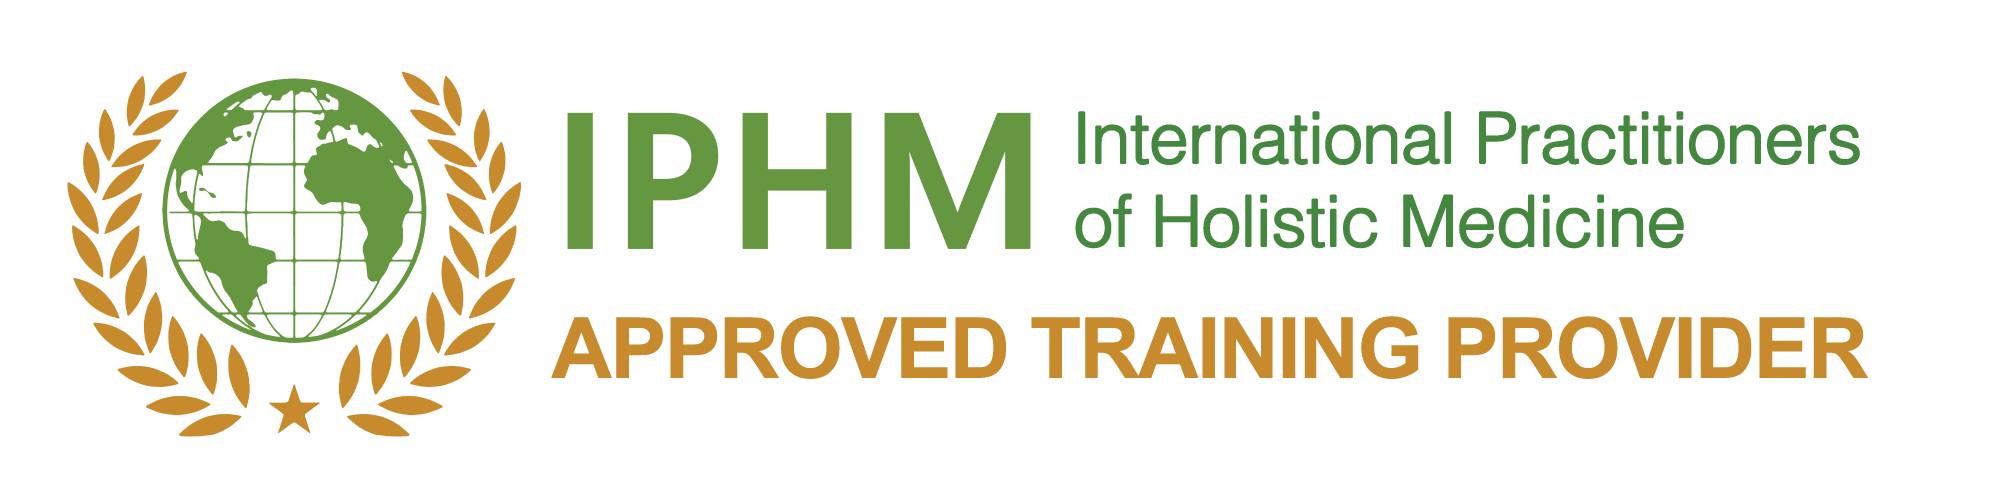 Logo IPHM International Practitioners of Holistic Medicine